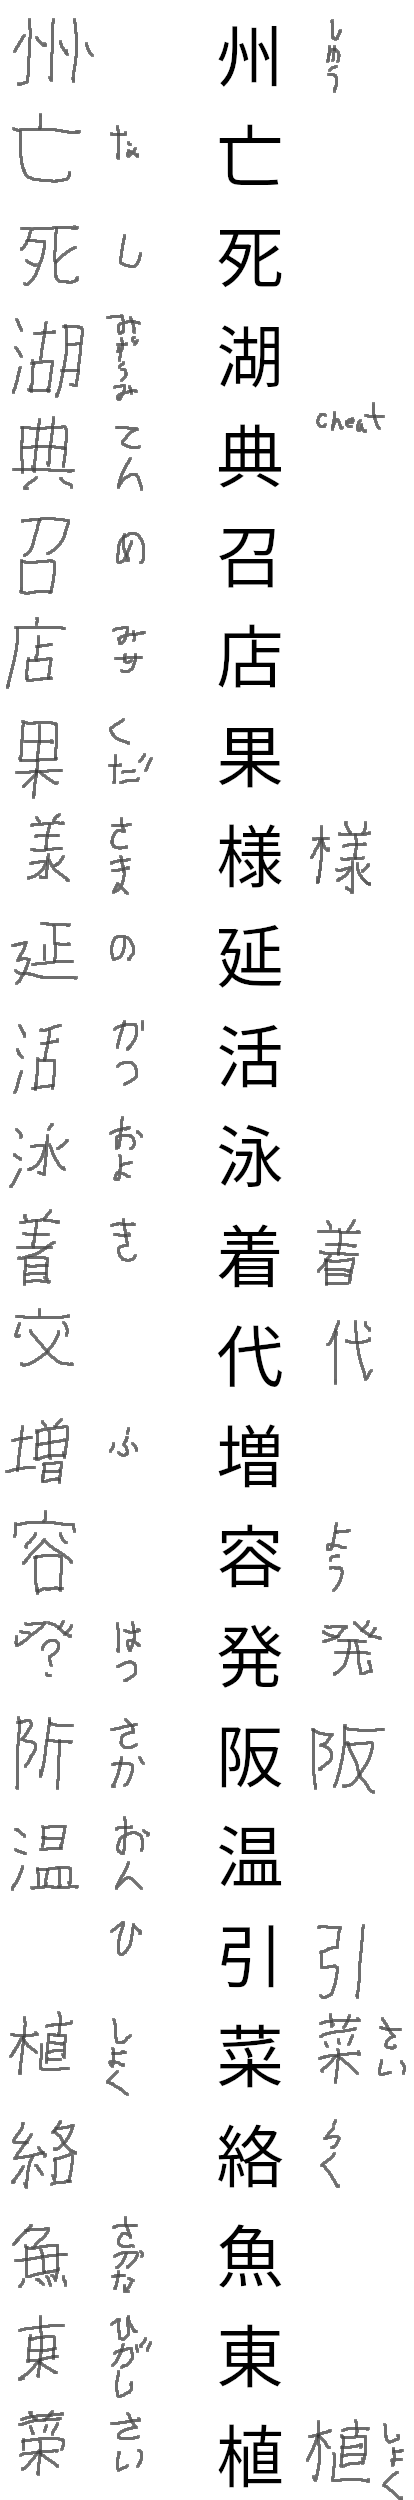 kanji test row 31